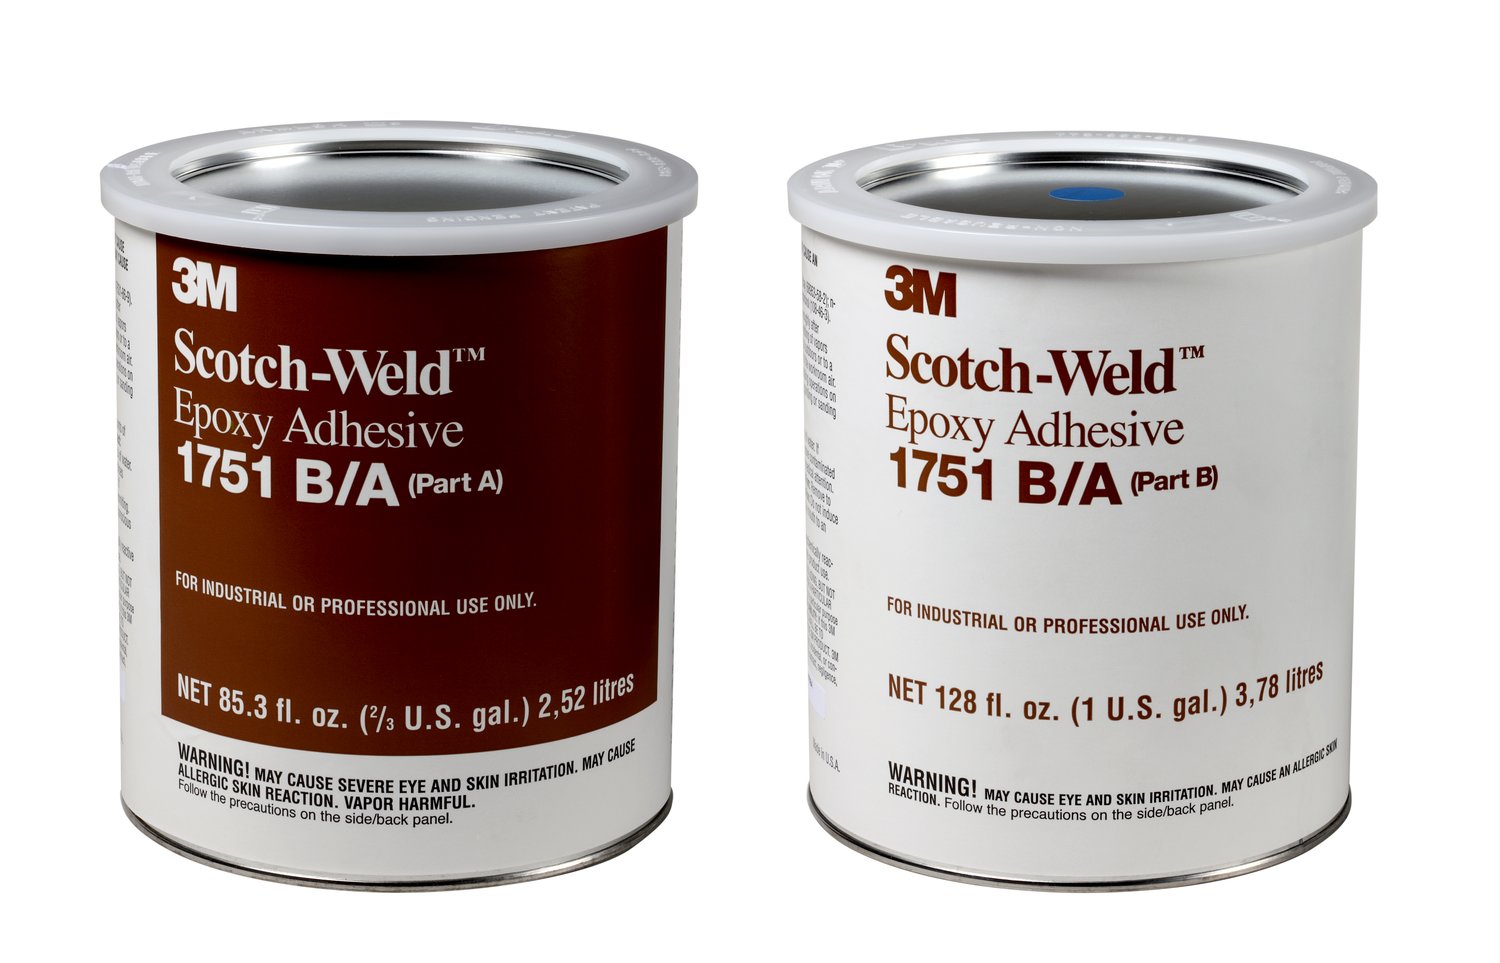 7000046339 - 3M Scotch-Weld Epoxy Adhesive 1751, Gray, Part B/A, 1 Gallon, 2 Kit/Case